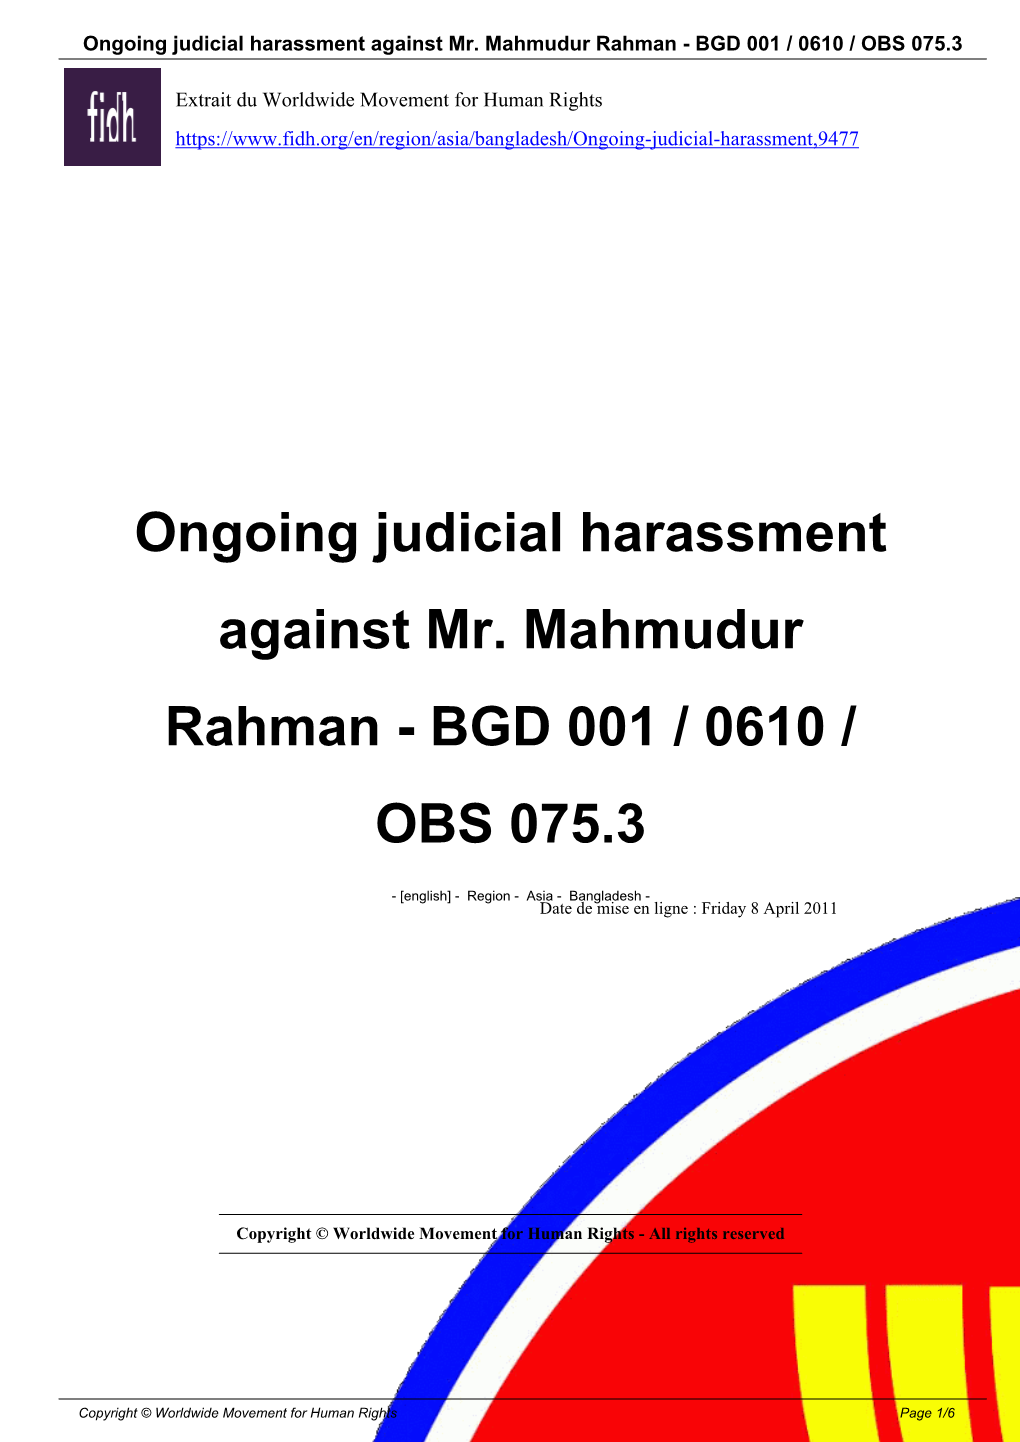 Ongoing Judicial Harassment Against Mr. Mahmudur Rahman - BGD 001 / 0610 / OBS 075.3